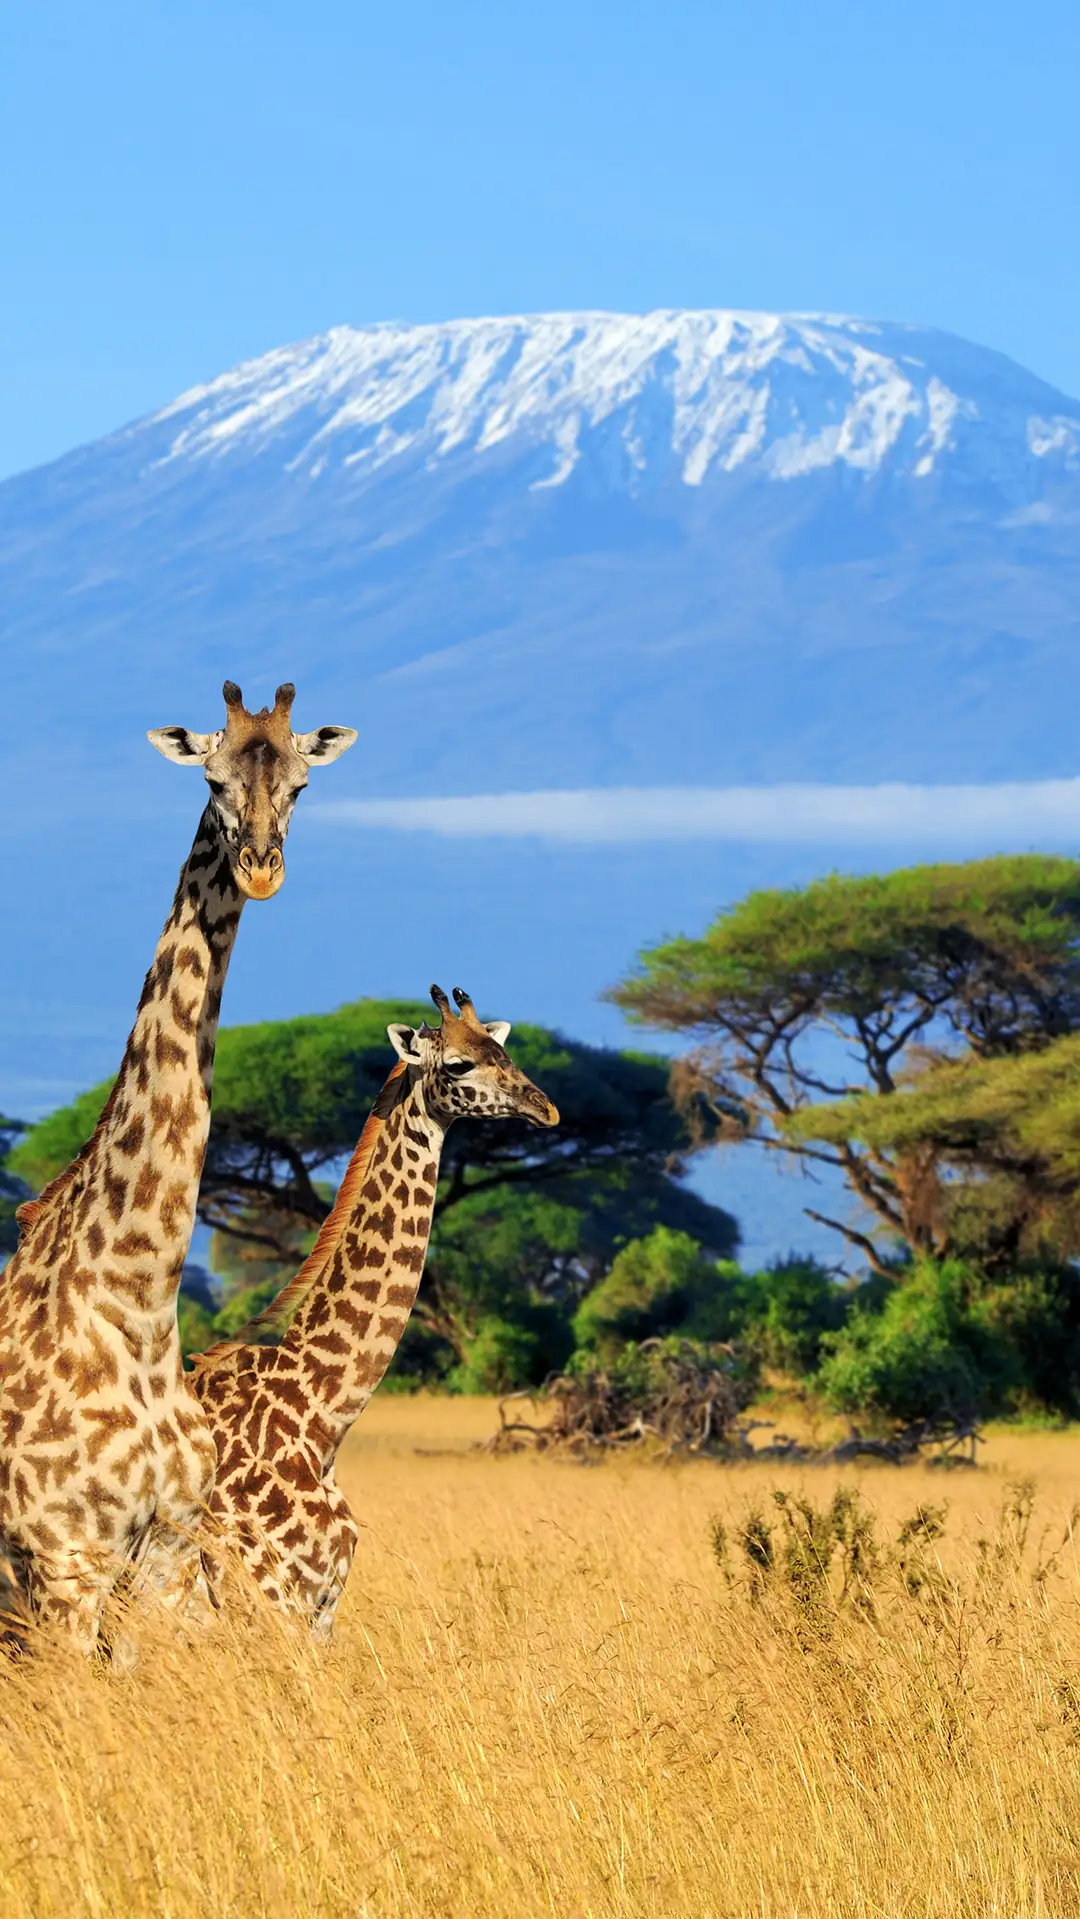 Three giraffes in a national park in Kenya.